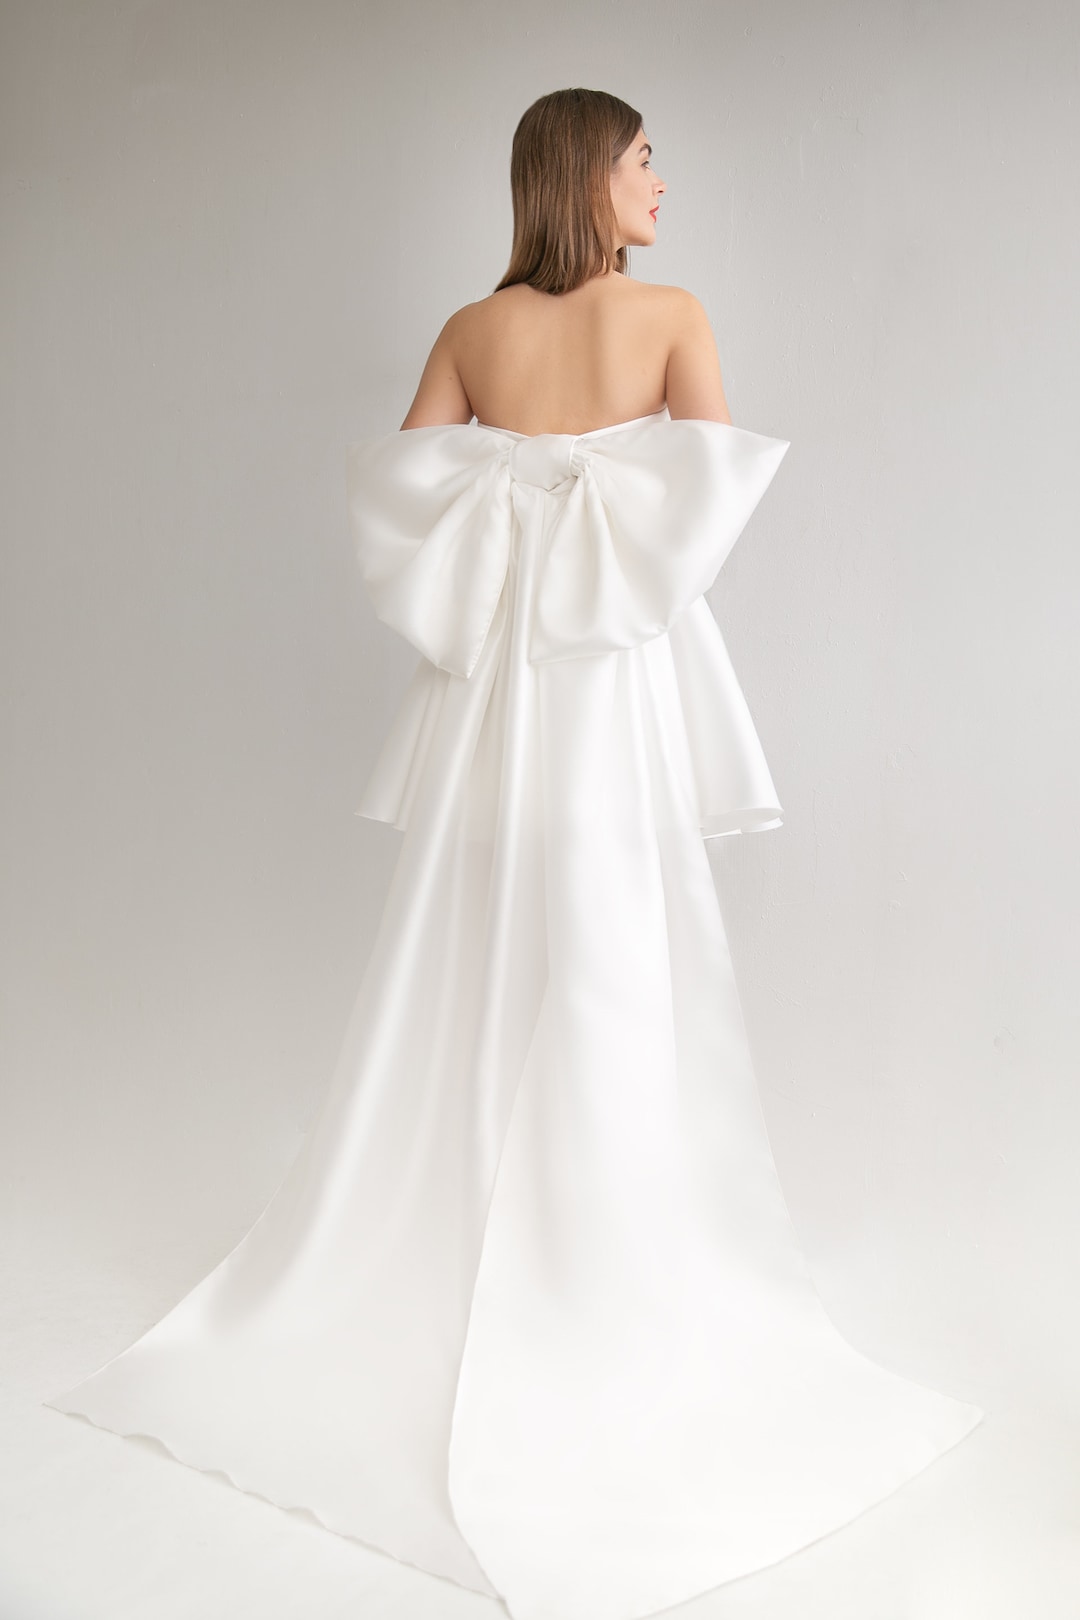 Short Wedding Dress SOPHIE With Detachable Bow. White Wedding Dress ...